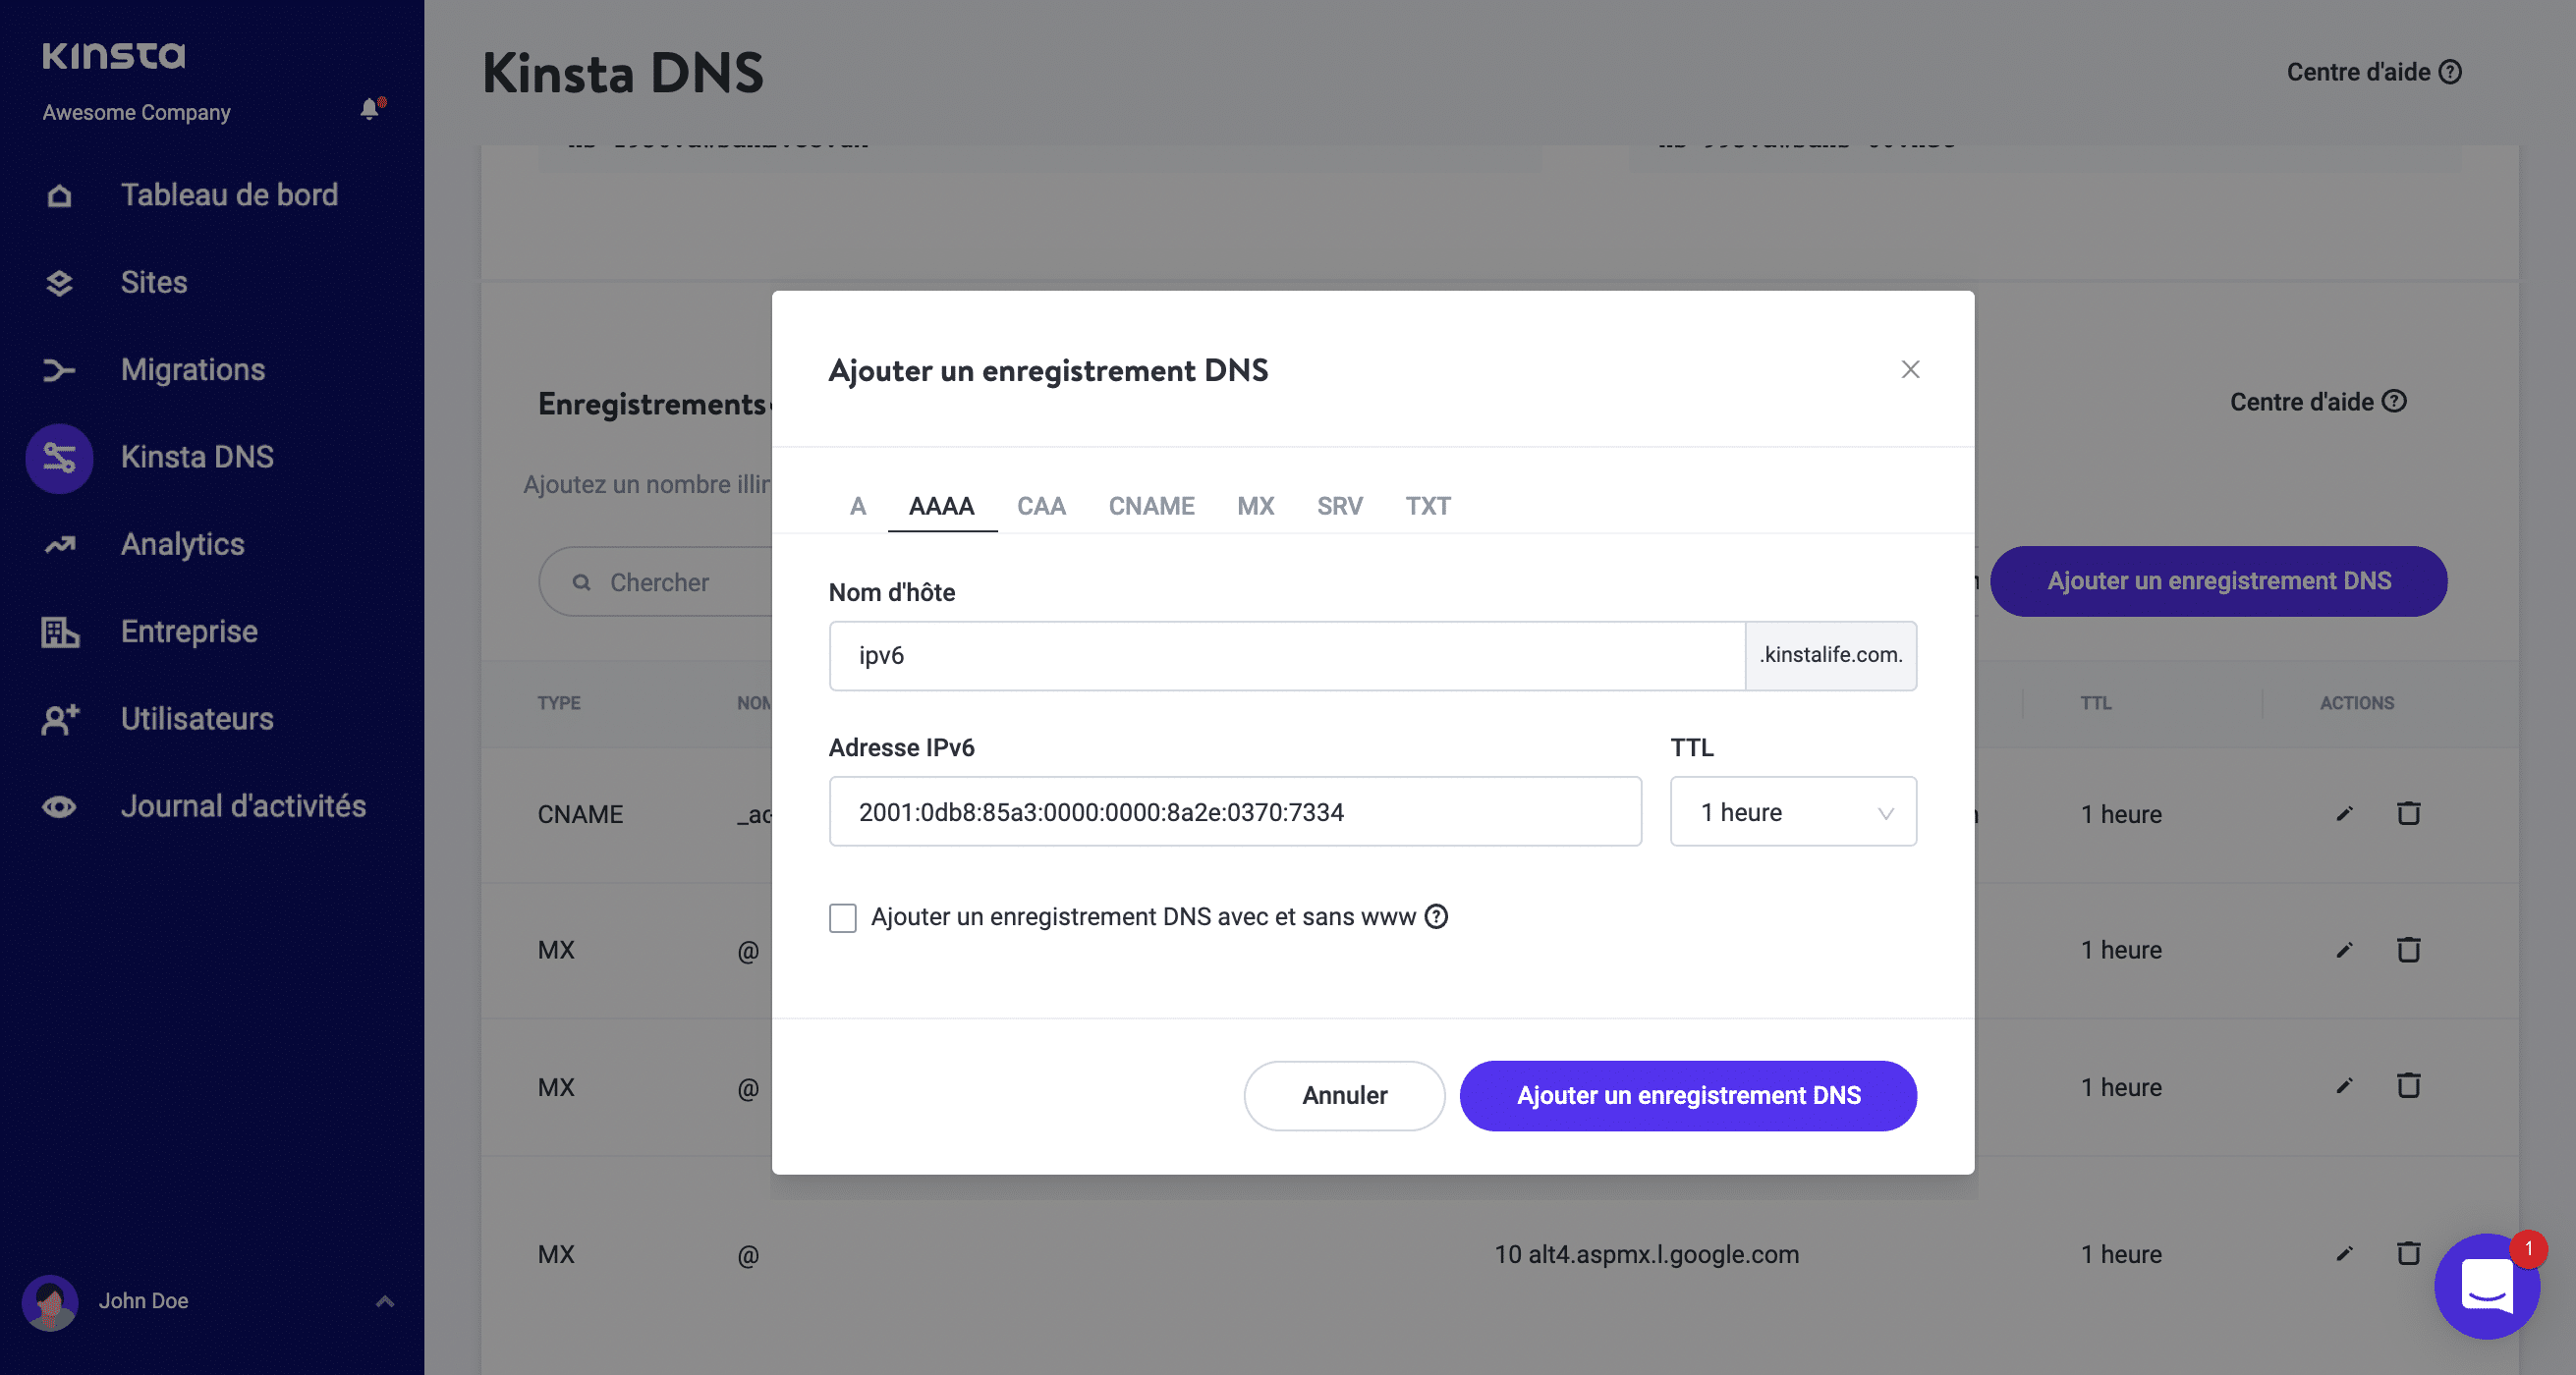 Ajouter un enregistrement AAAA dans Kinsta DNS.